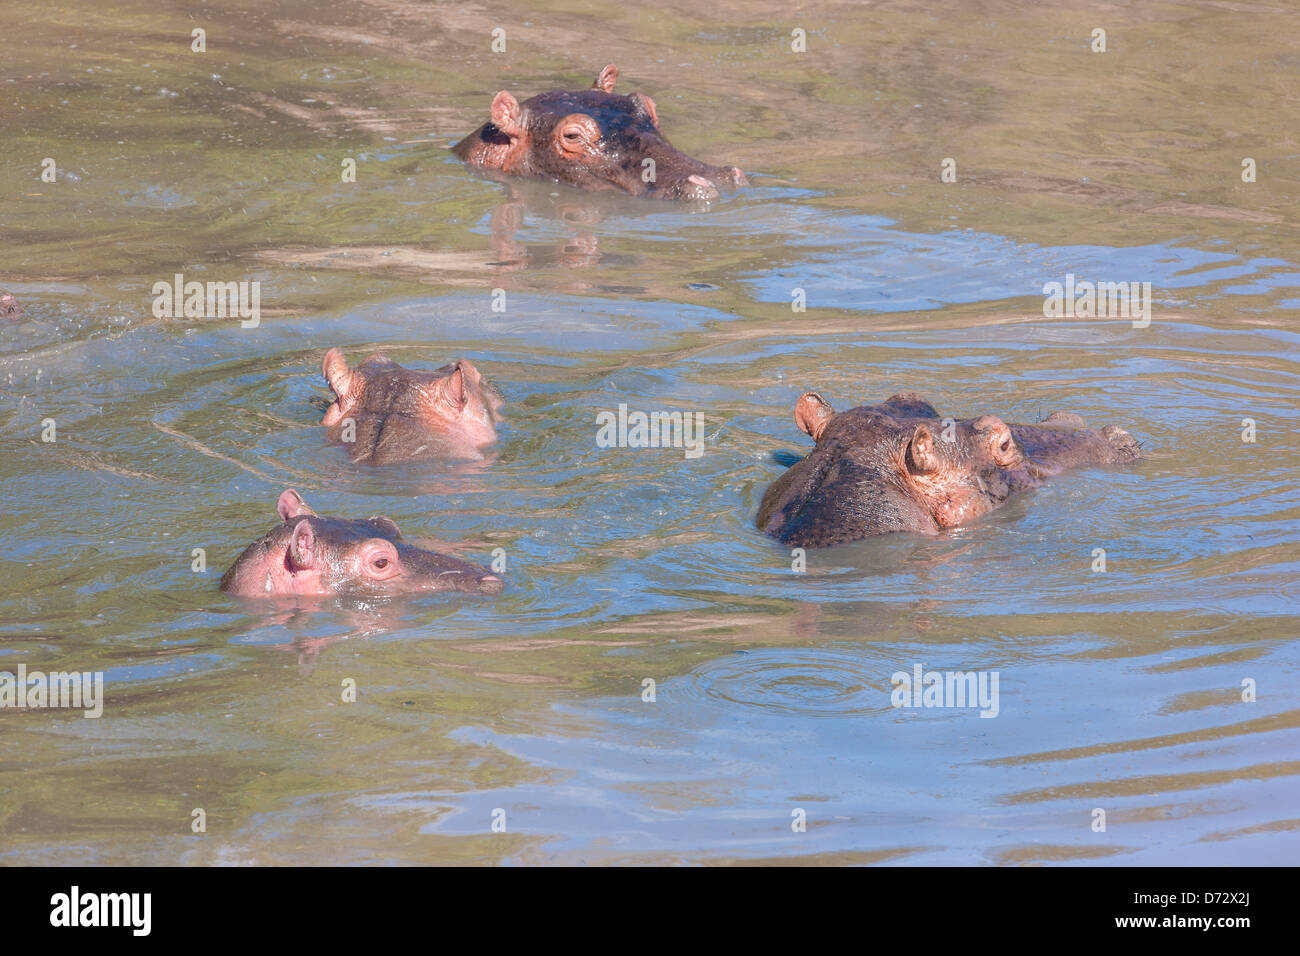 Familie der Flusspferde Baden im Fluss Stockfoto